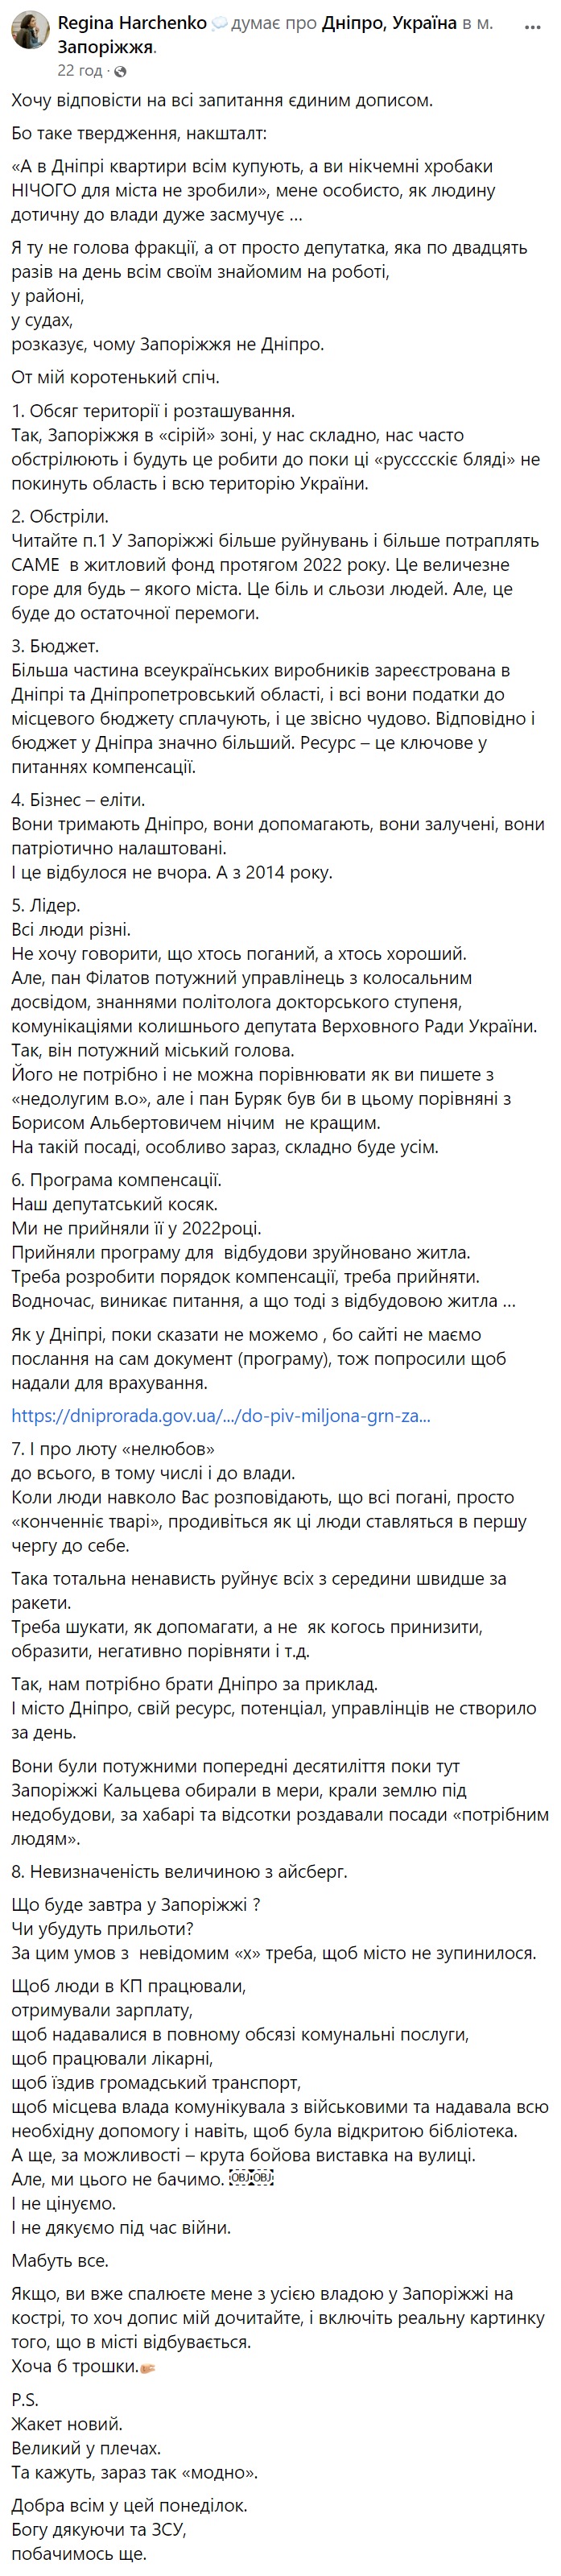 Запорізька депутатка відреагувала на скандал з виплатами - || фото: facebook.com/ReginaHarchenko21